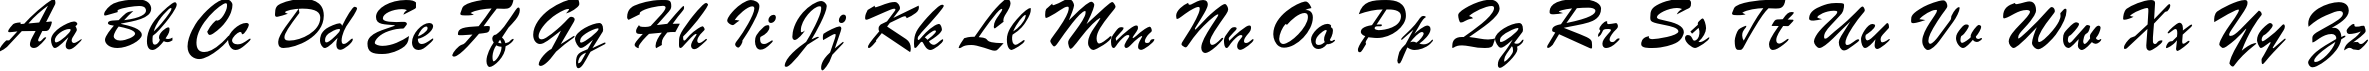 Пример написания английского алфавита шрифтом ParsekC